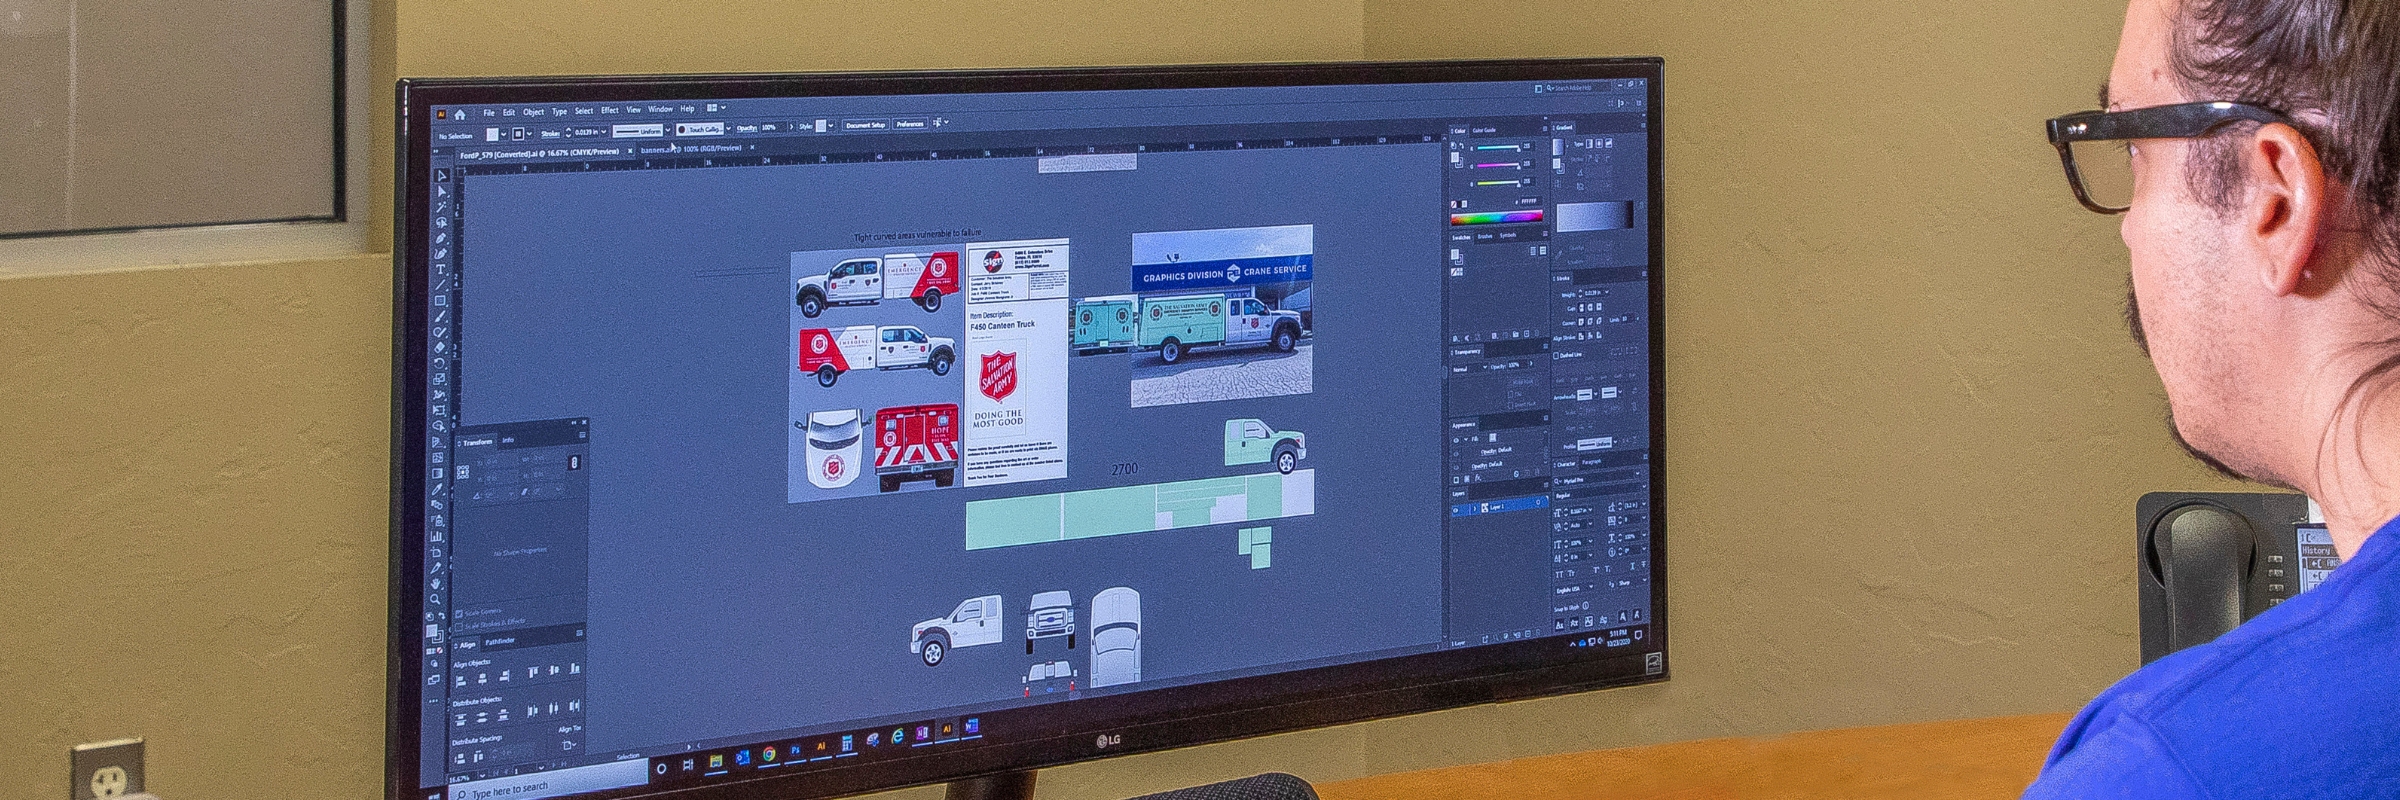 employee designing vehicle graphics on computer